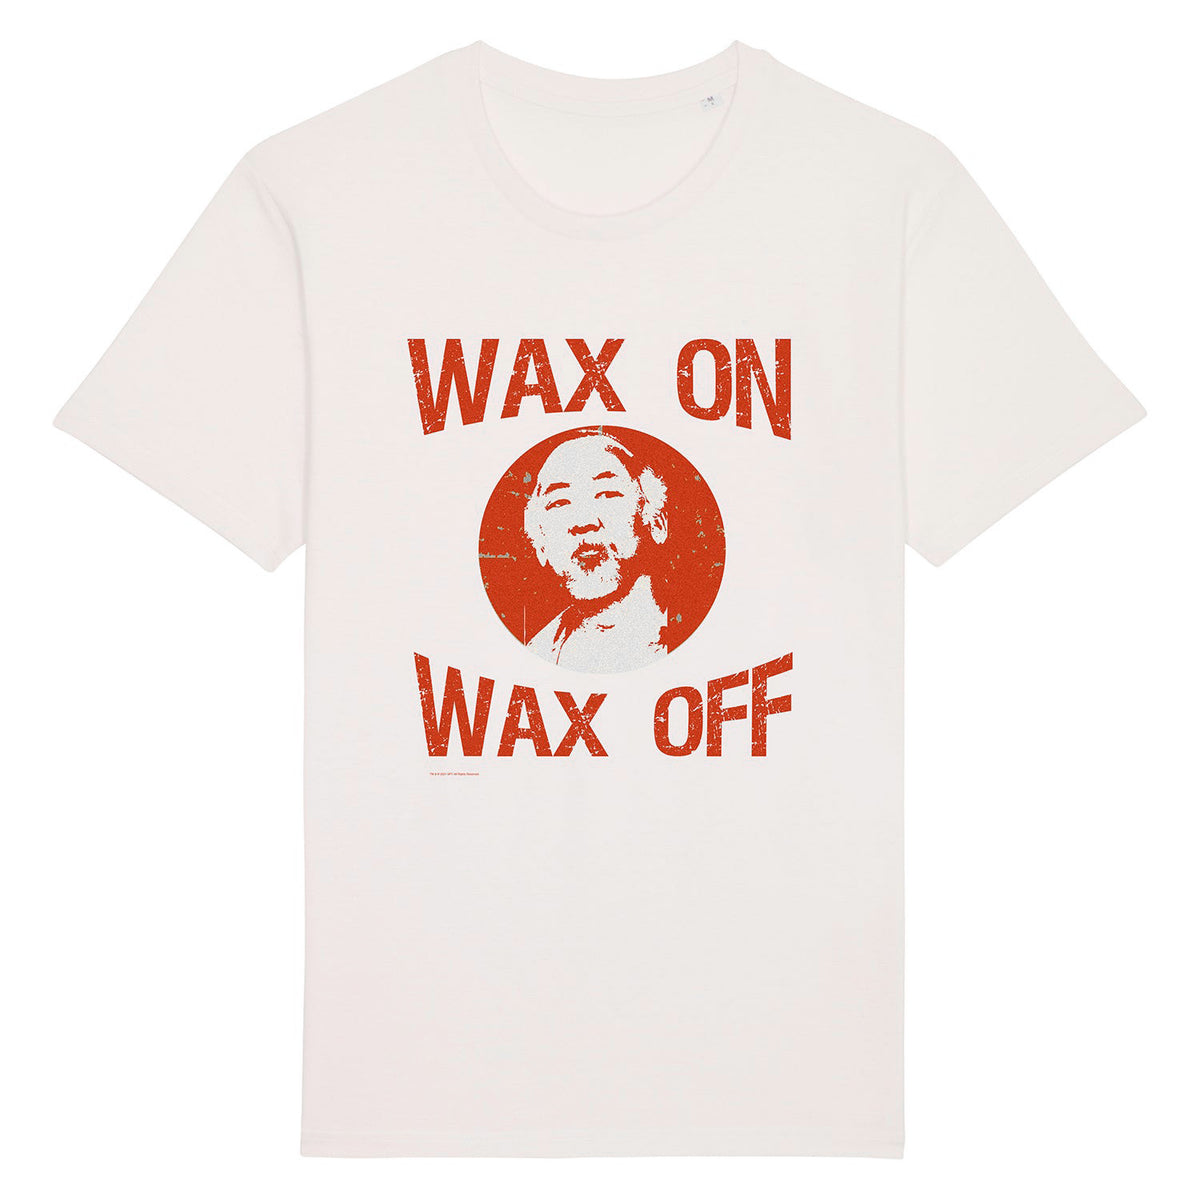 Wax On Wax Off White Kids T-Shirt